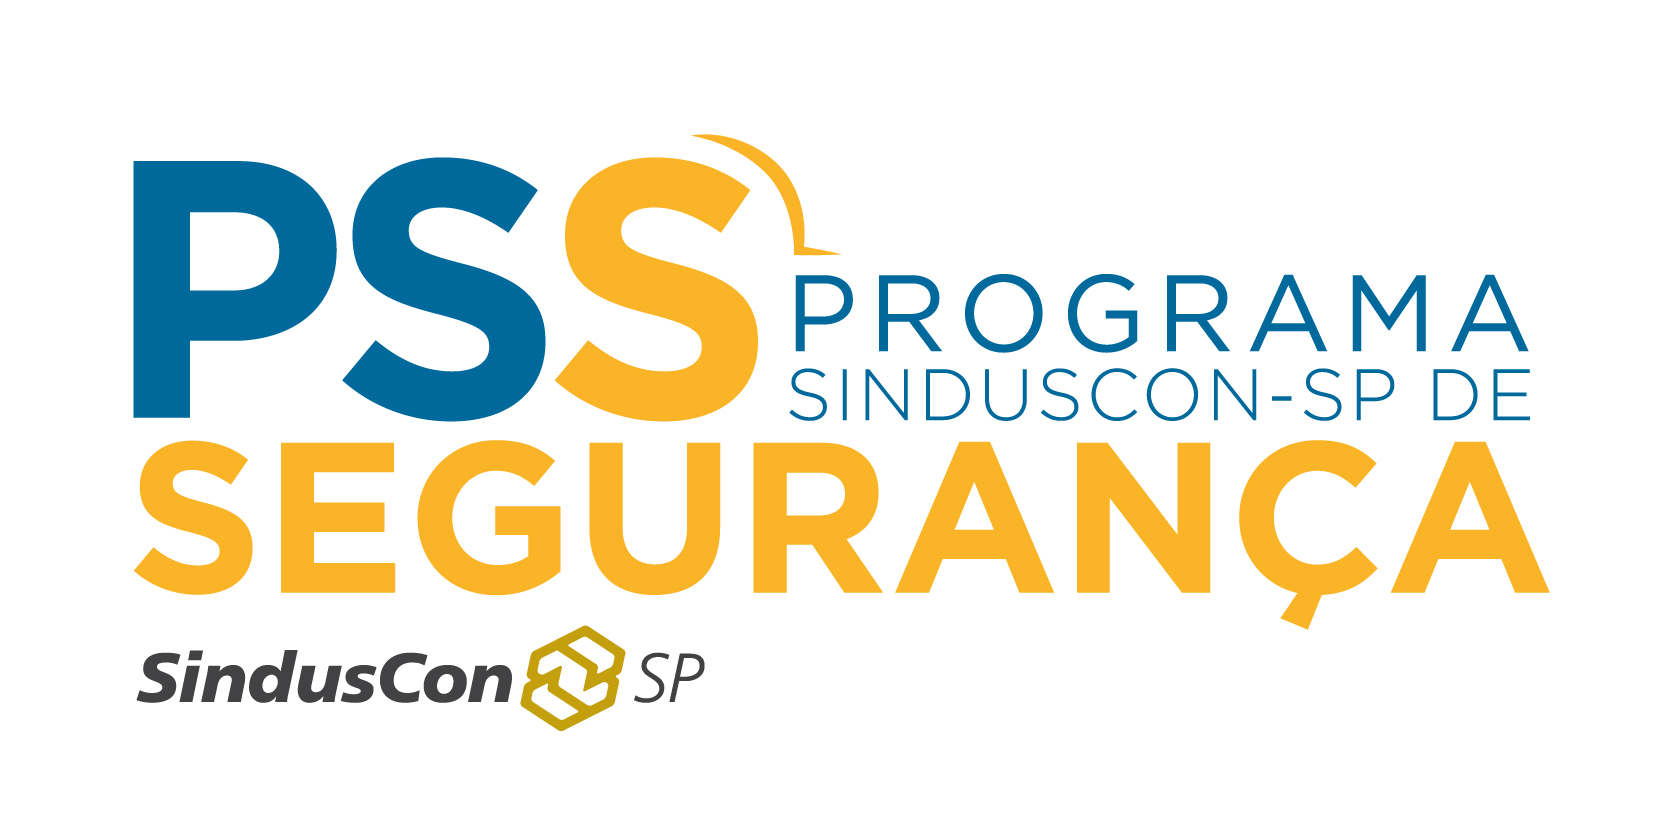 SindusCon-SP apoia construtoras durante pandemia com PSS 